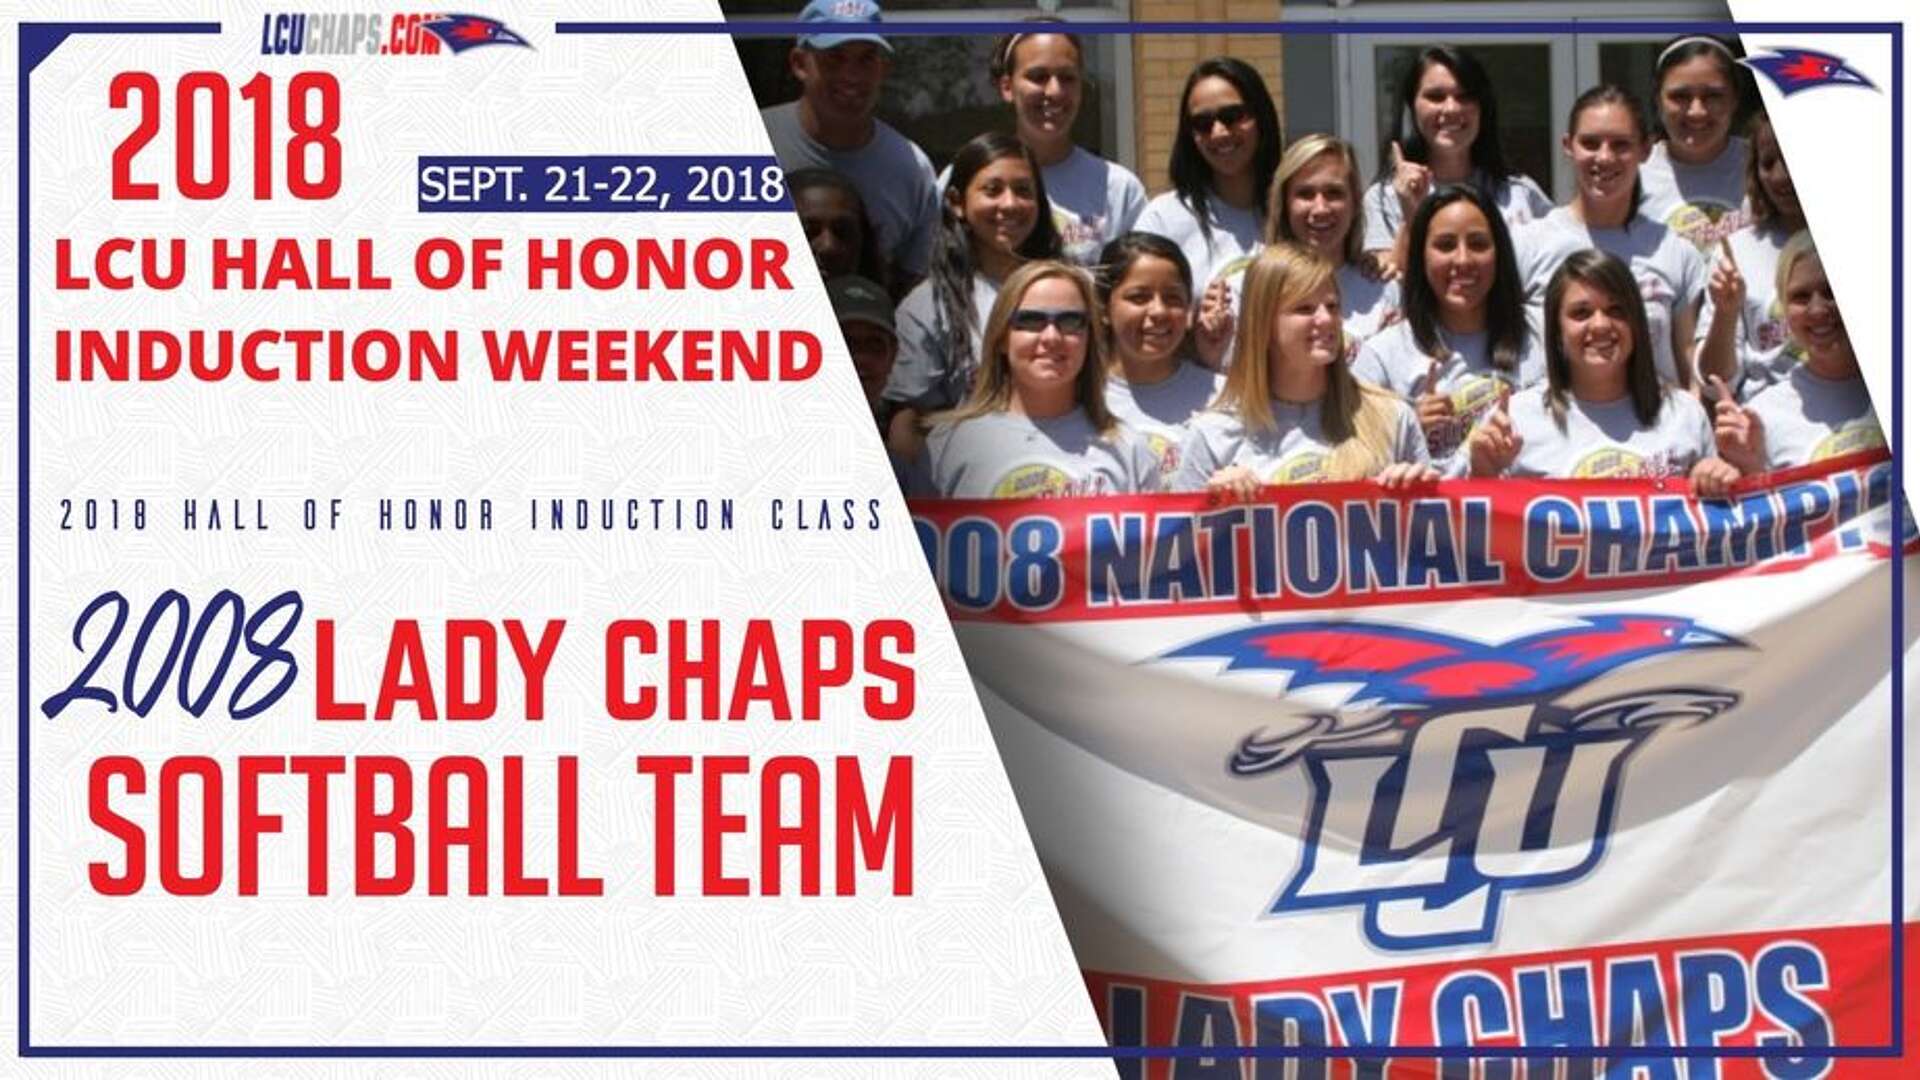 2008 Lady Chaps Softball Team Group photo